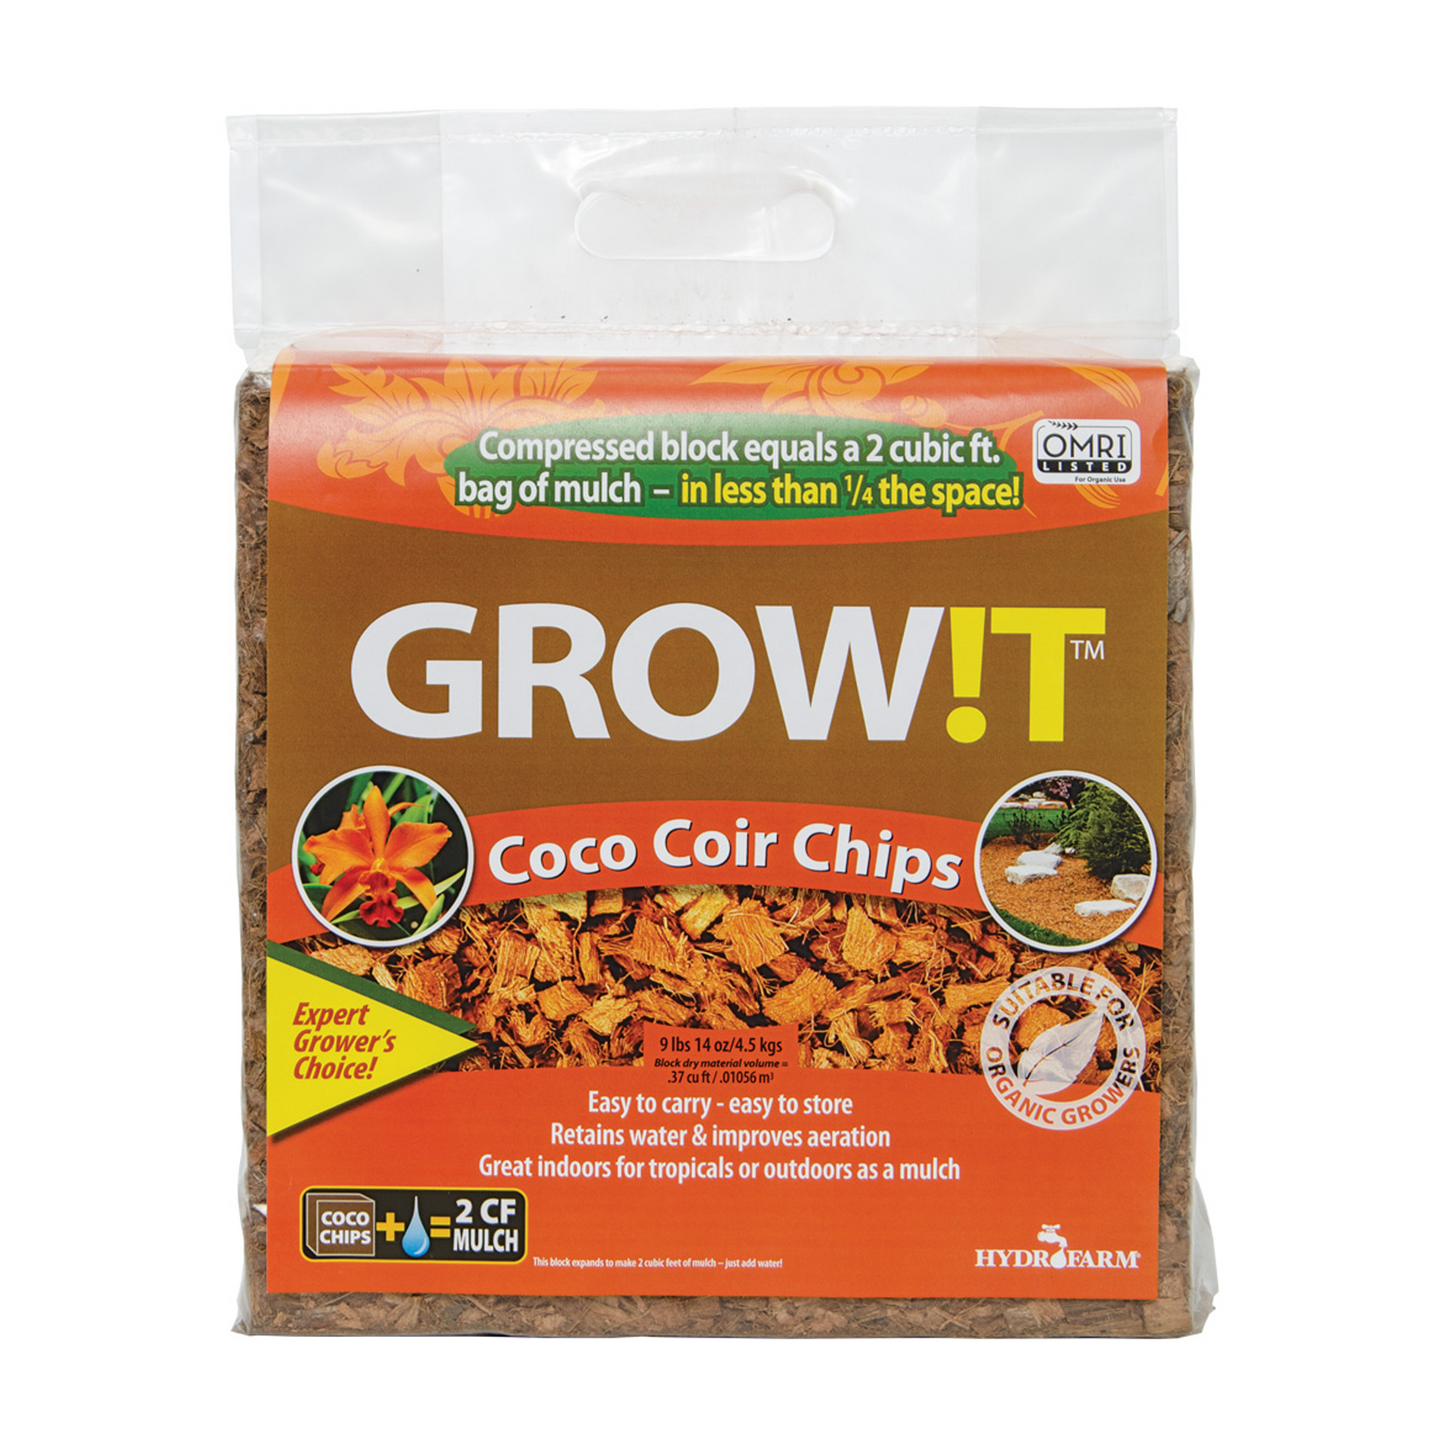 GROW!T Coco Coir Chips, Block